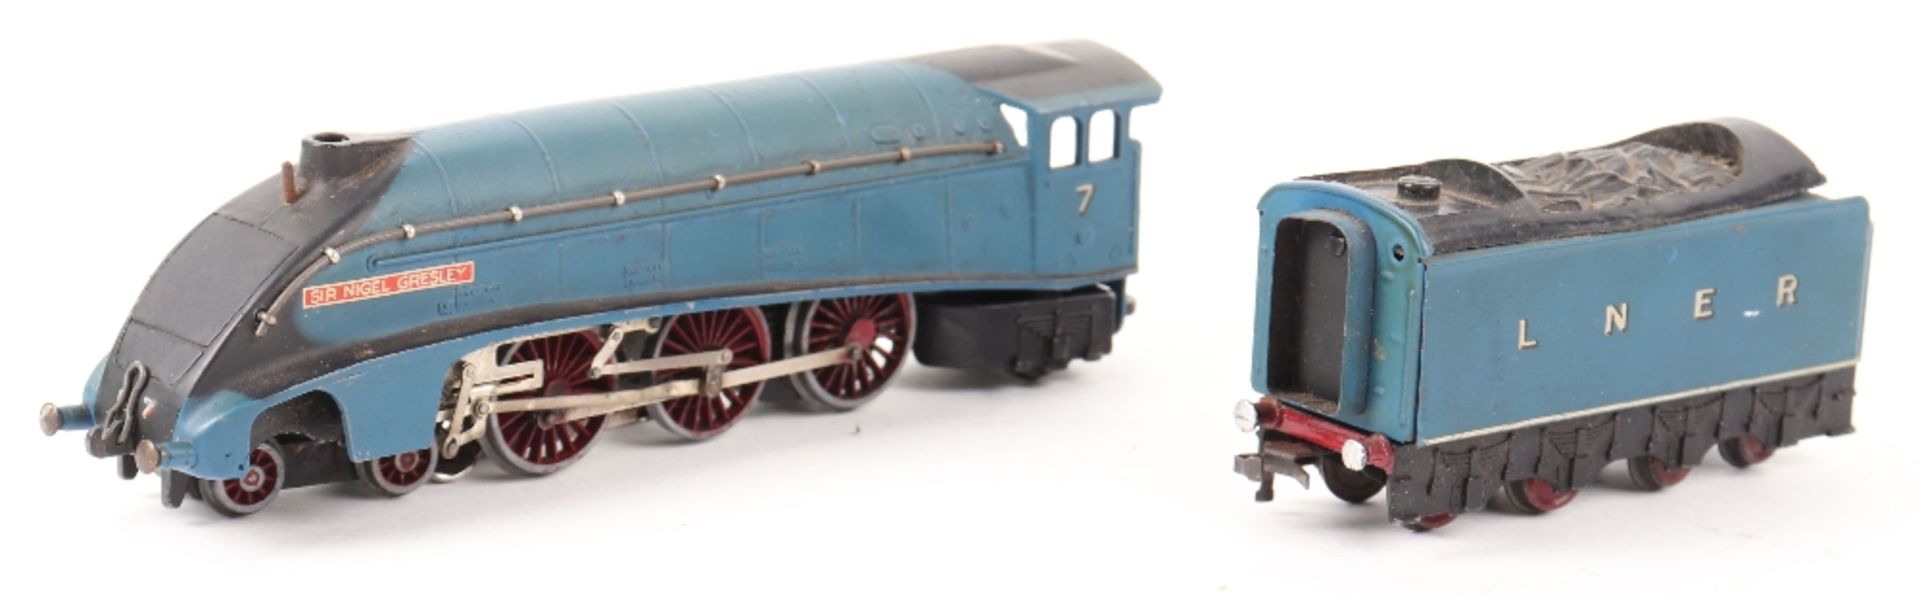 Hornby Dublo 3-rail EDL1 Sir Nigel Gresley locomotive and tender - Image 3 of 9